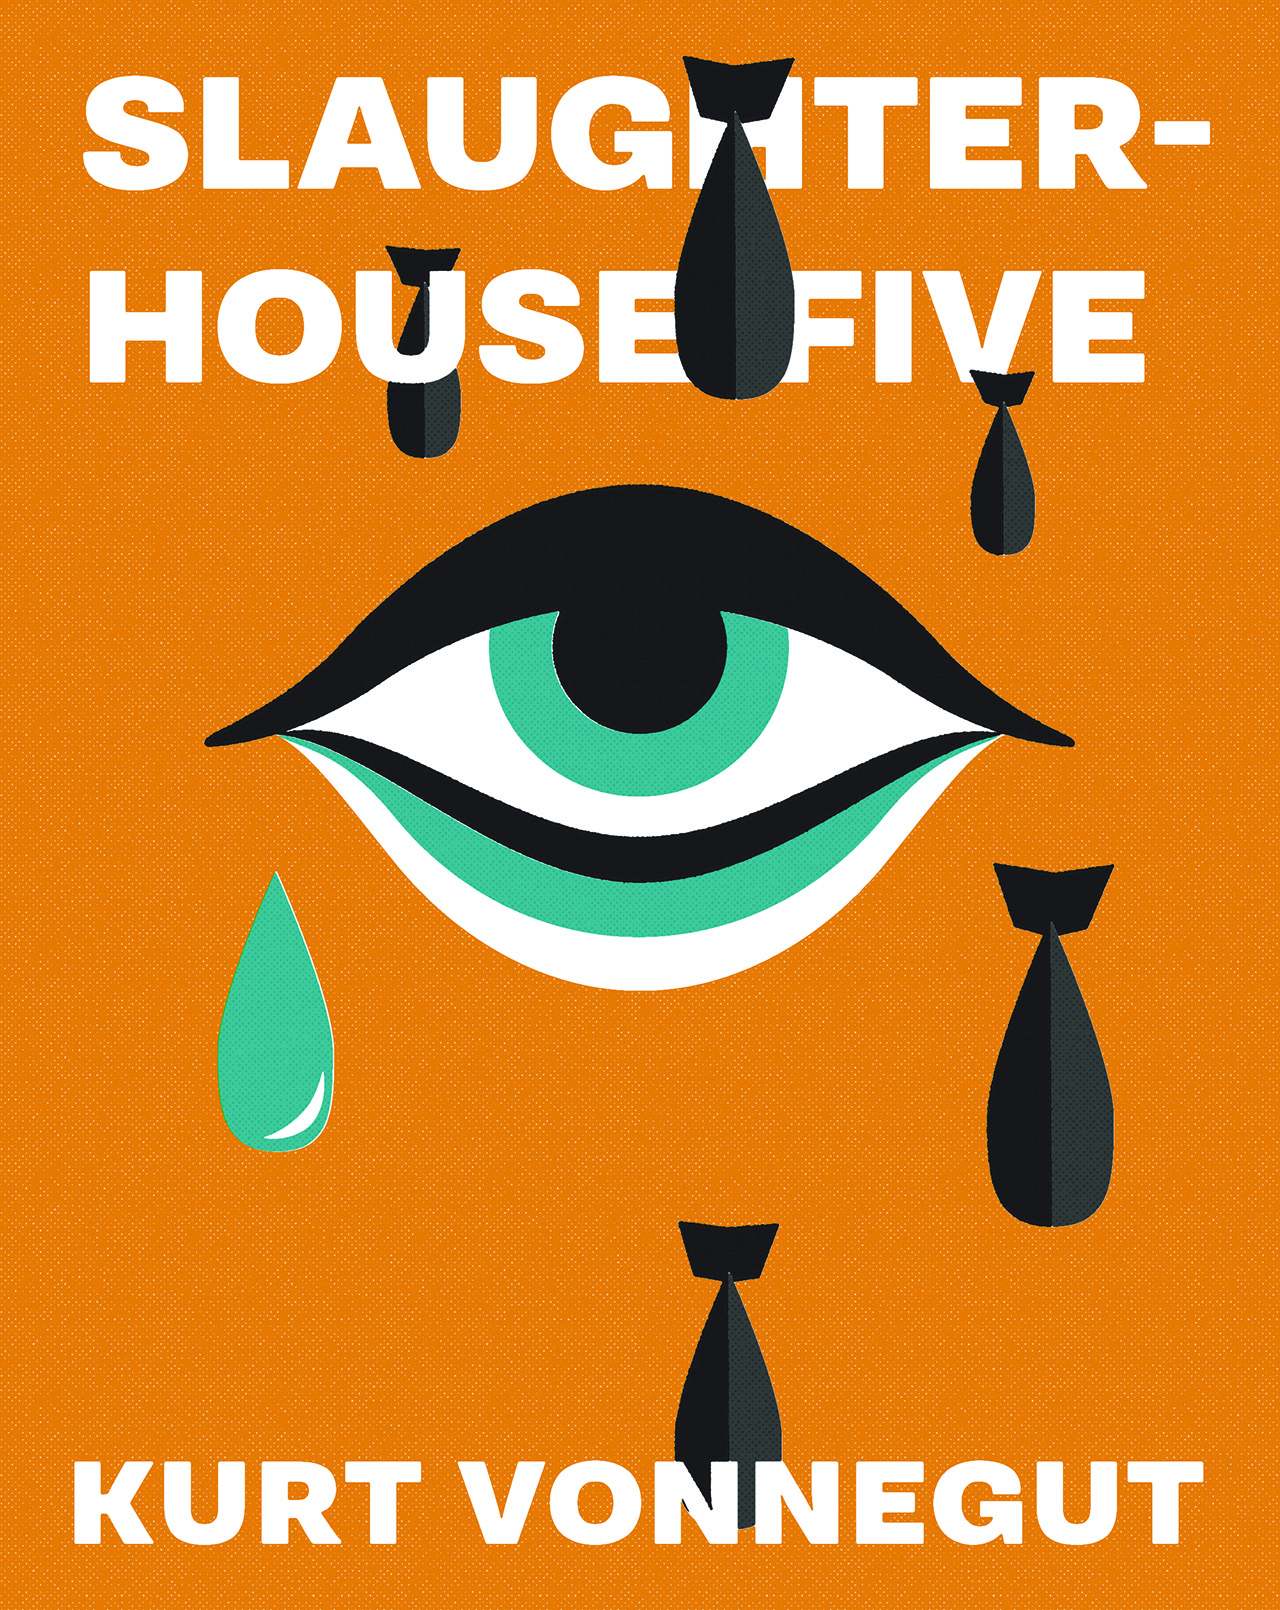 Ryan Kindinger | "Slaughterhouse Five" by Kurt Vonnegut